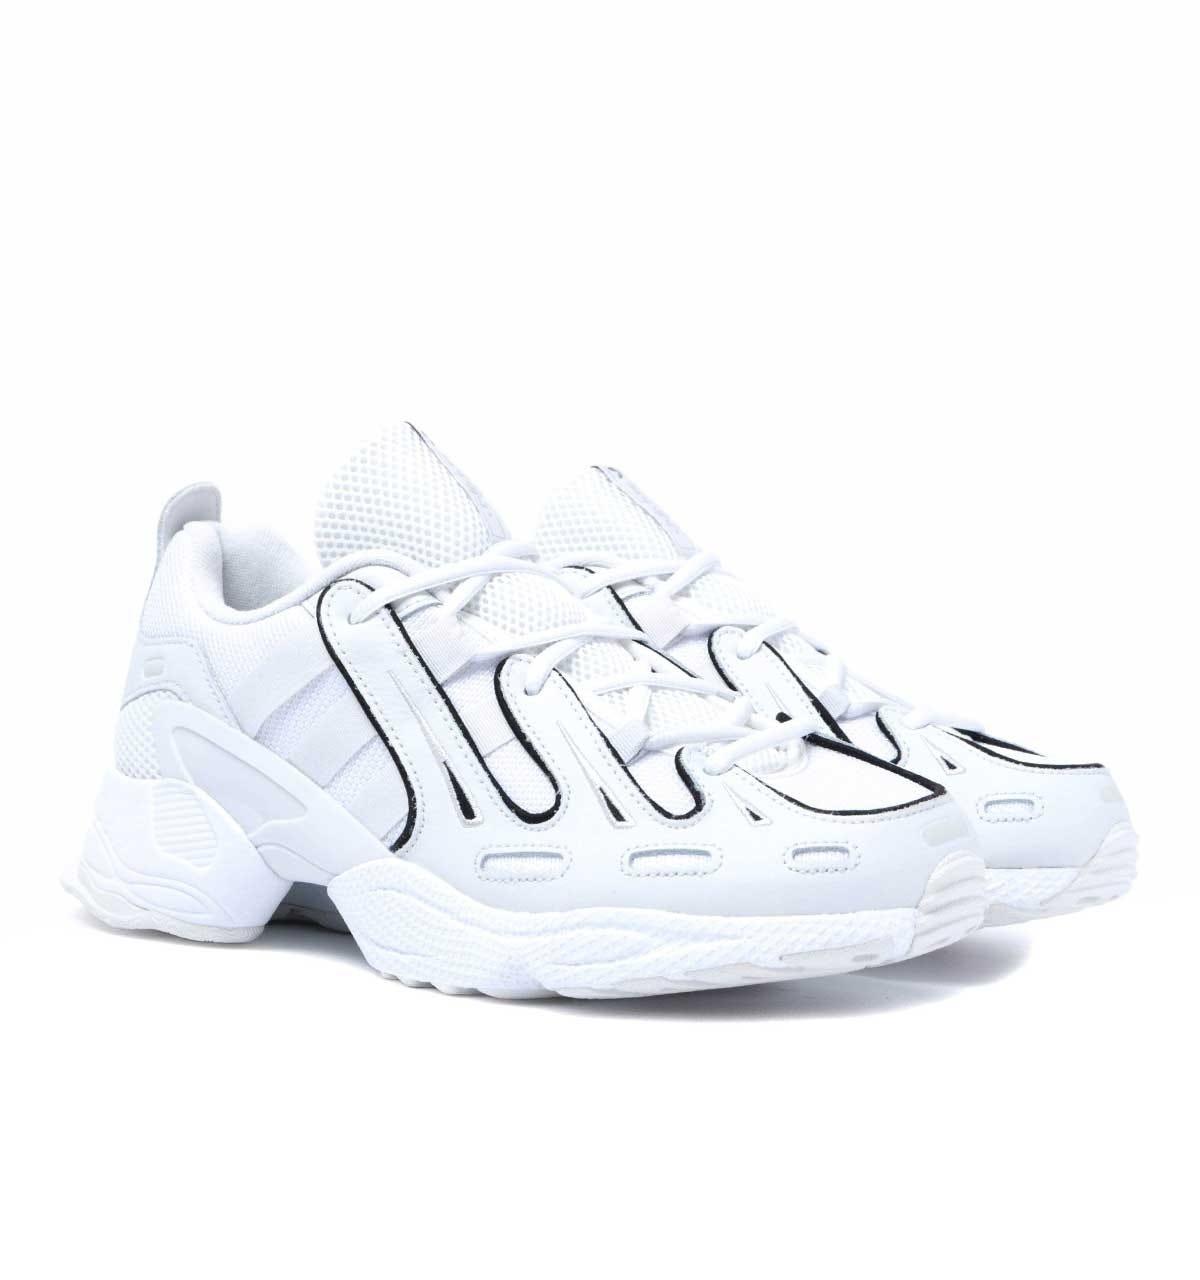 adidas Sneakers Uomo Eqt Gazelle Ee7744 in White/Black (White) for ... سجادة يوغا